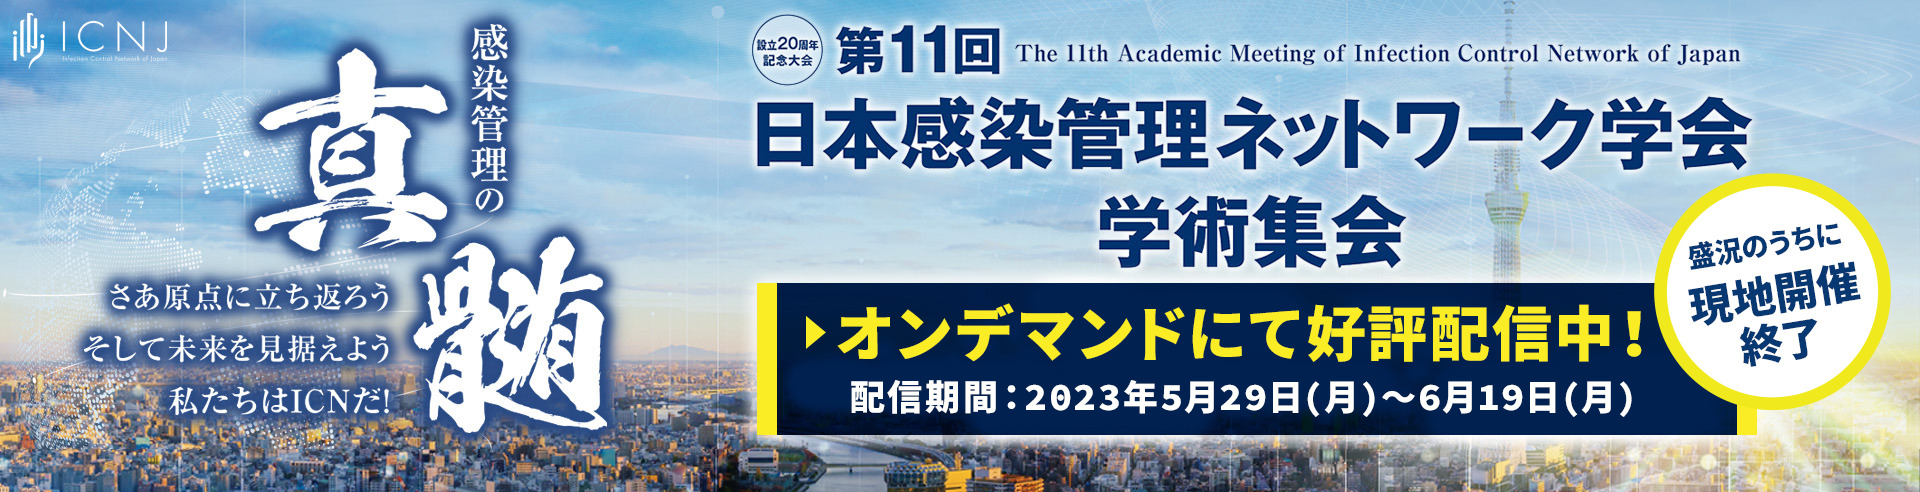 第11回 日本感染管理ネットワーク学会学術集会